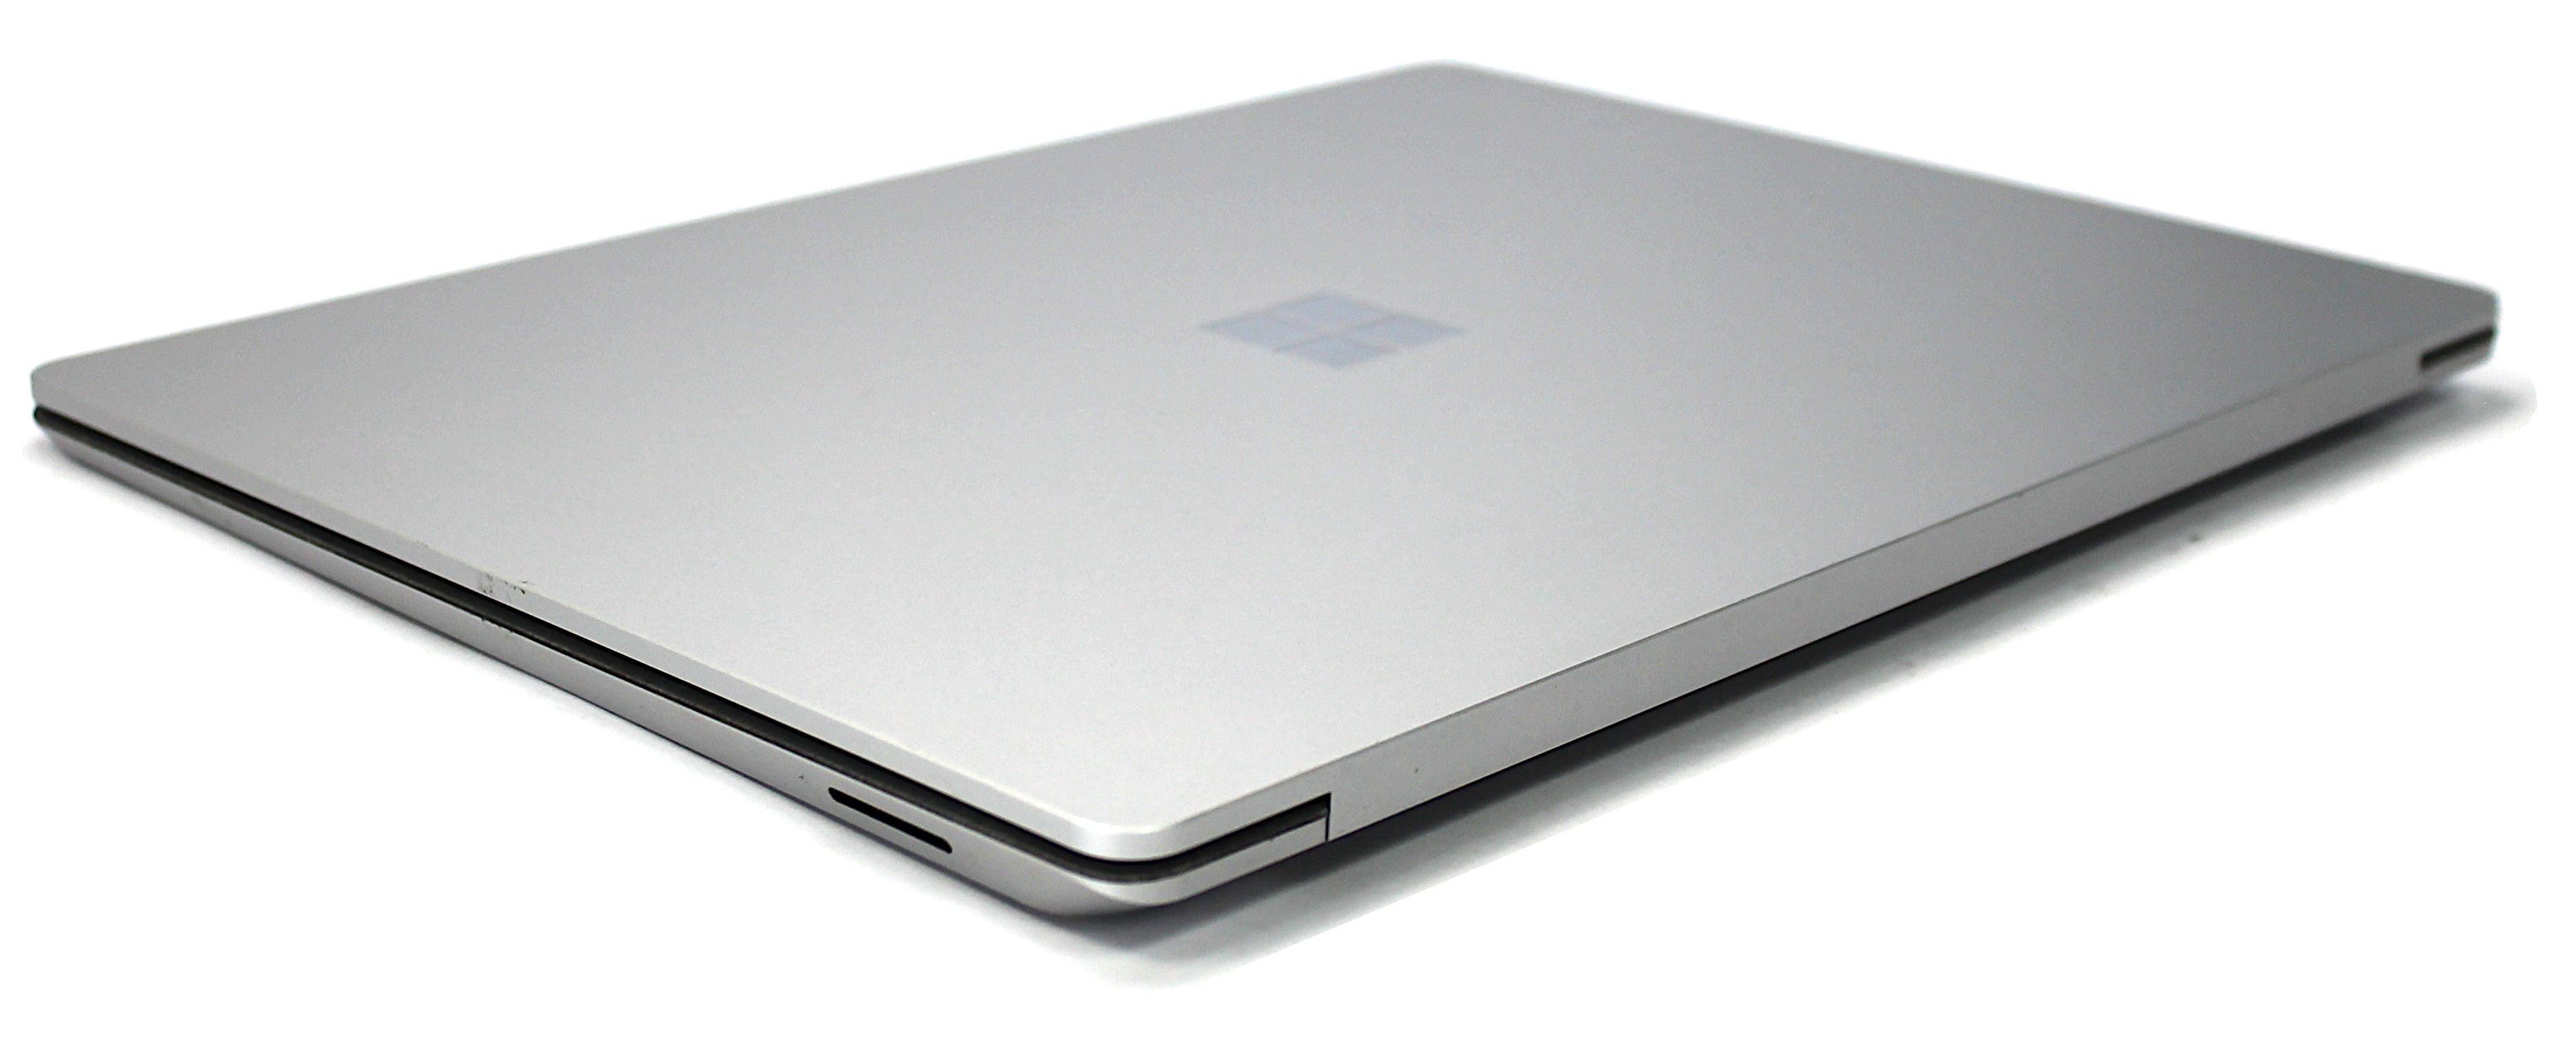 Microsoft Surface 3 Laptop, 13" 10th Gen Core i7, 16GB RAM, 256GB SSD